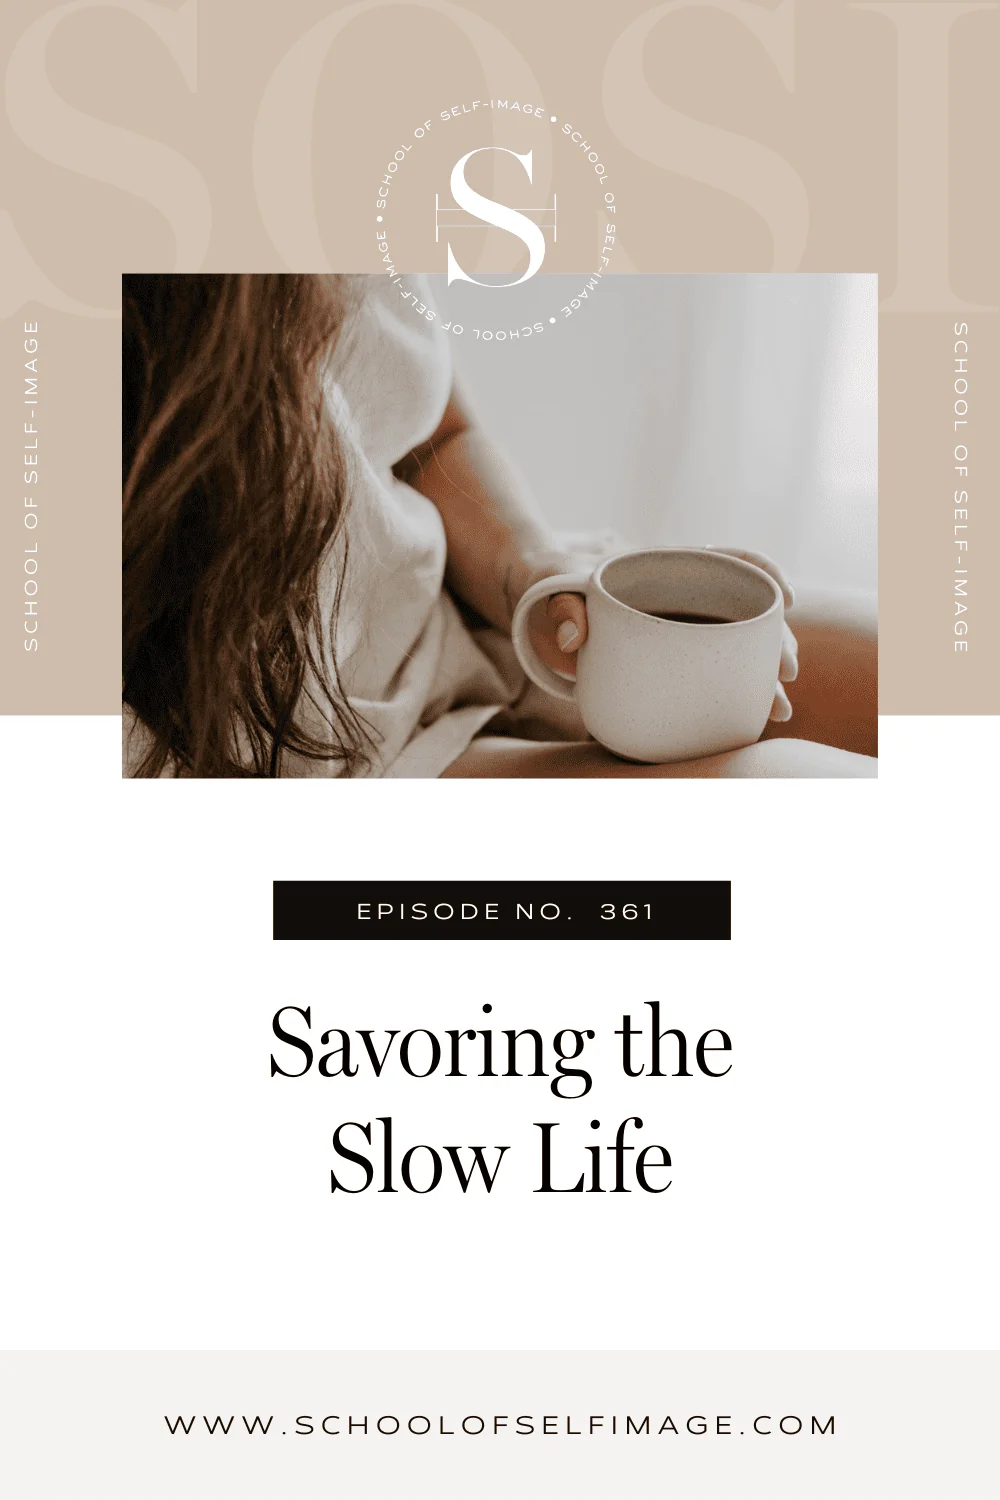 Savoring the Slow Life